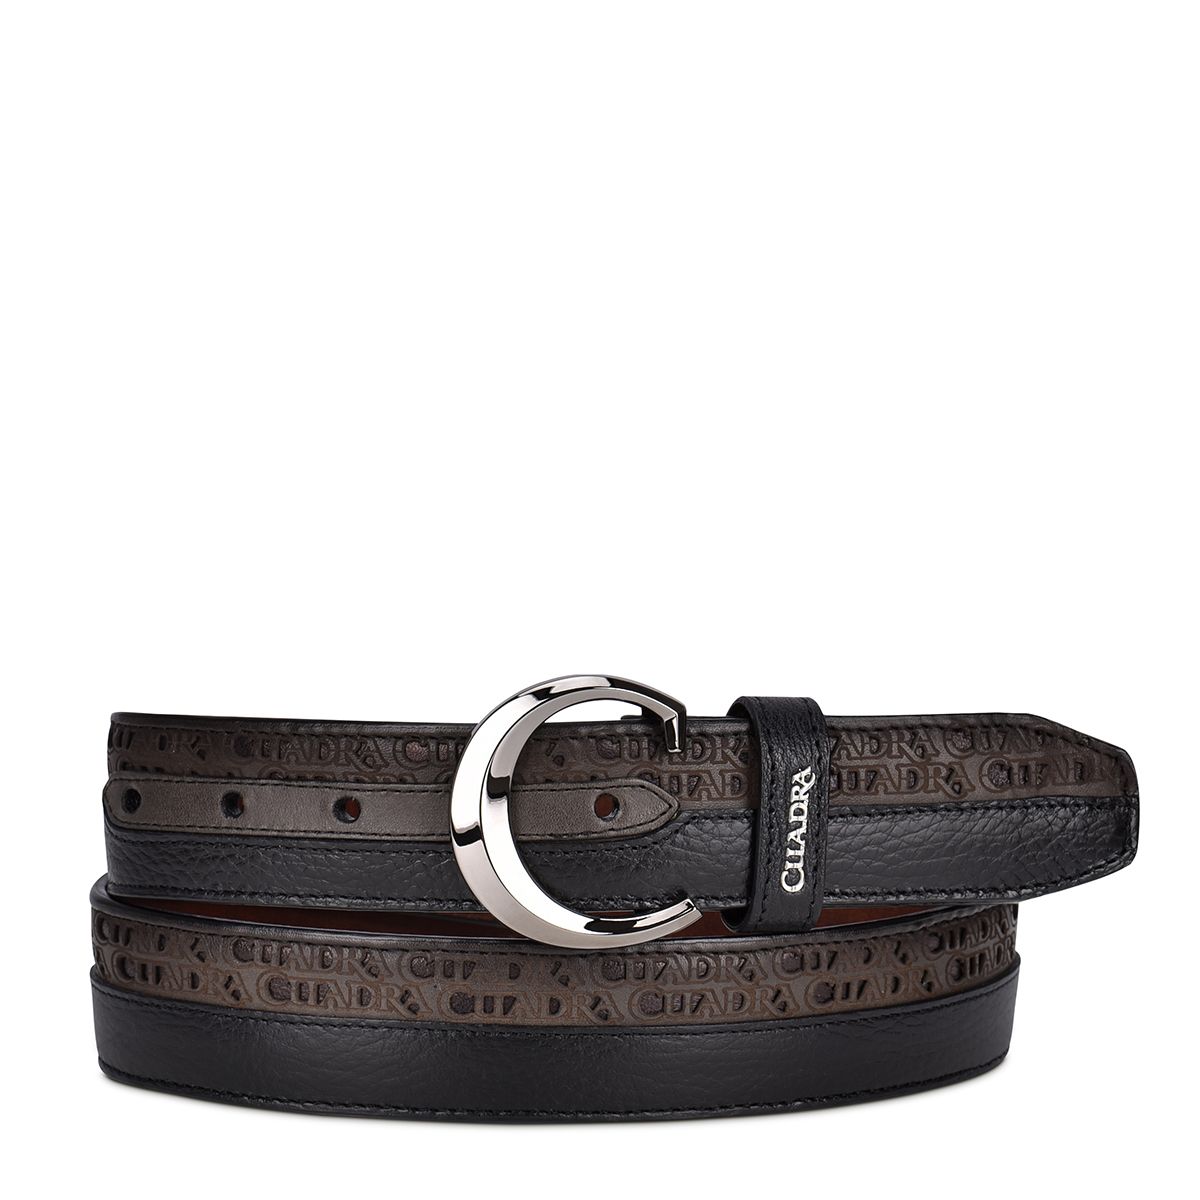 CS321RS - Cuadra oxford casual western cowhide leather belt for men.-CUADRA-Kuet-Cuadra-Boots